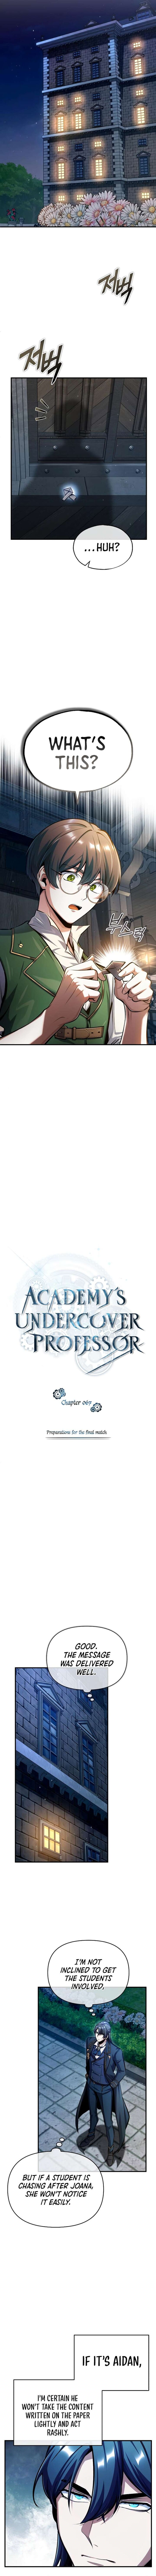 Academys Undercover Professor 67 6